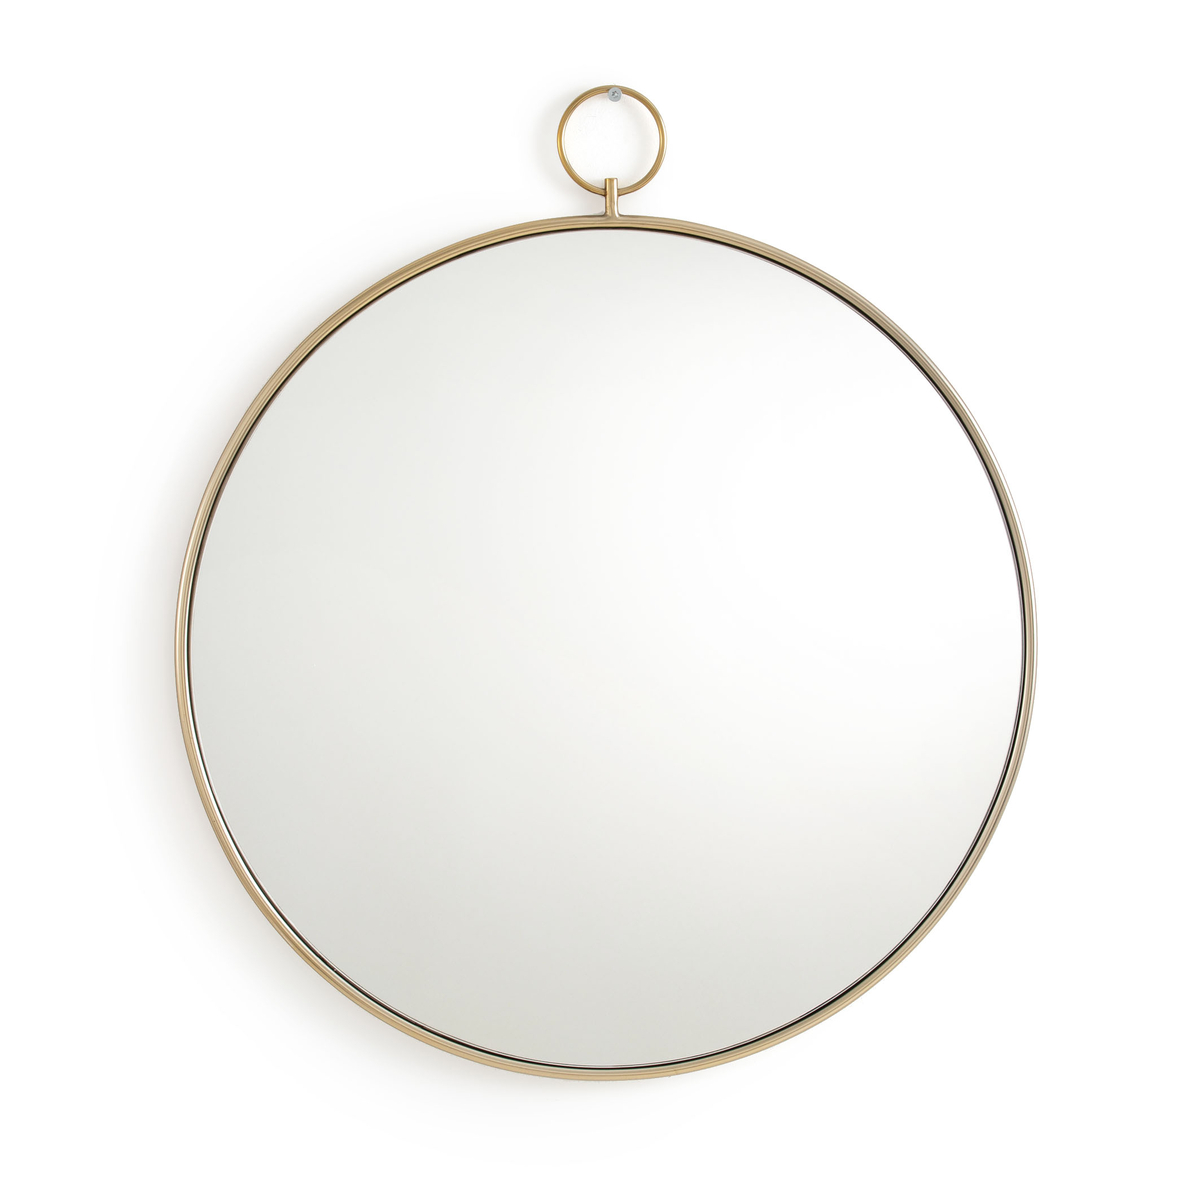 Uyova 60cm Round Metal Mirror